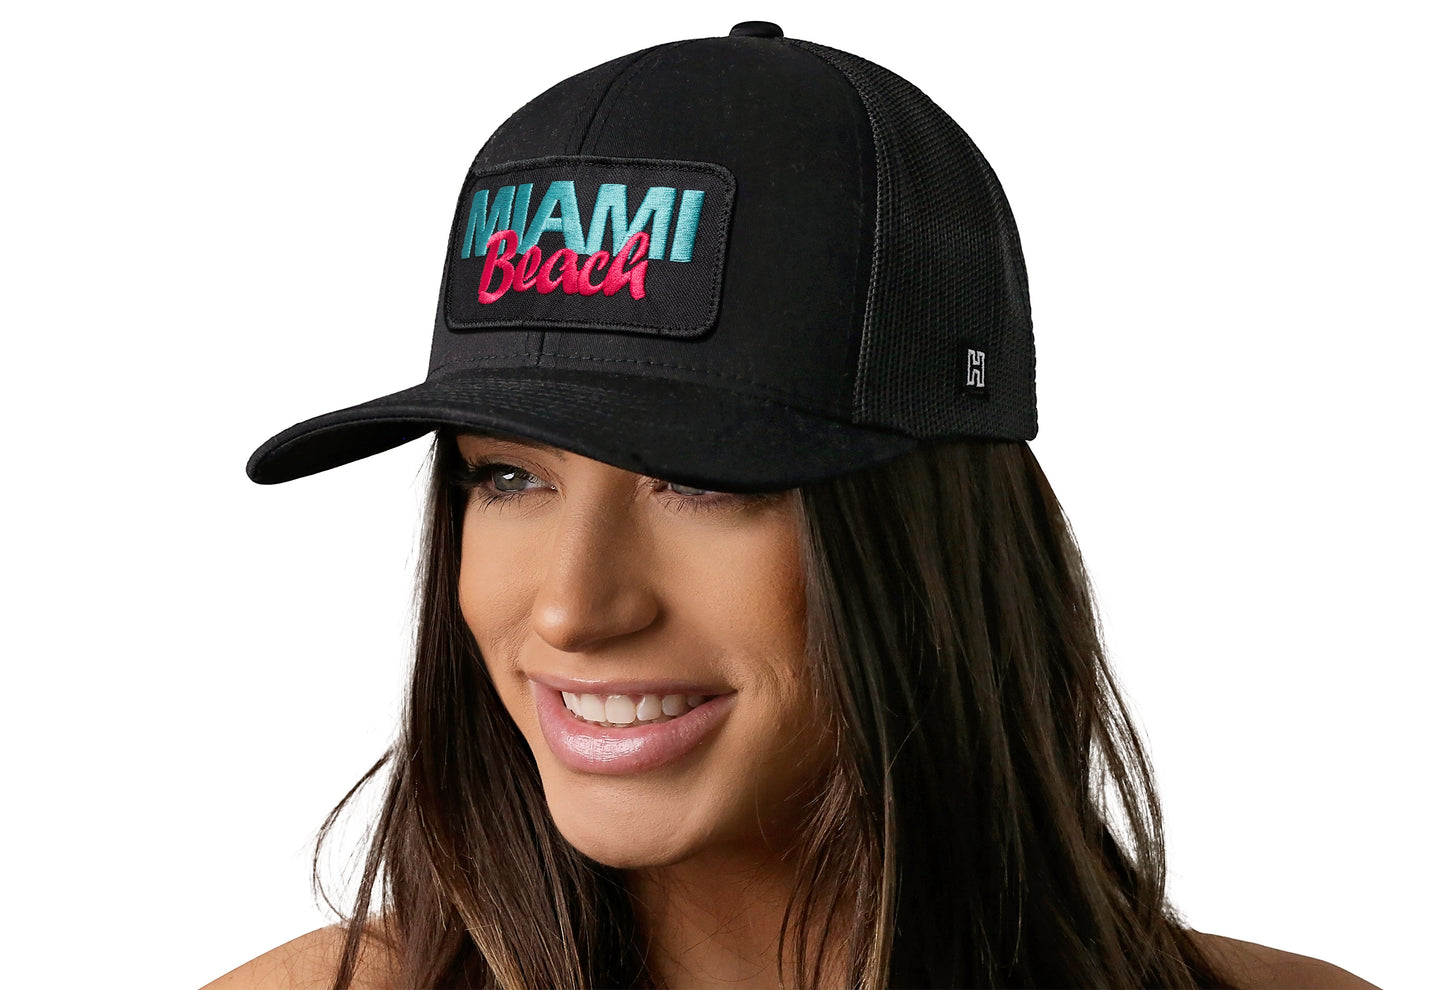 Miami Beach Trucker Hat  |  Black Beach Snapback